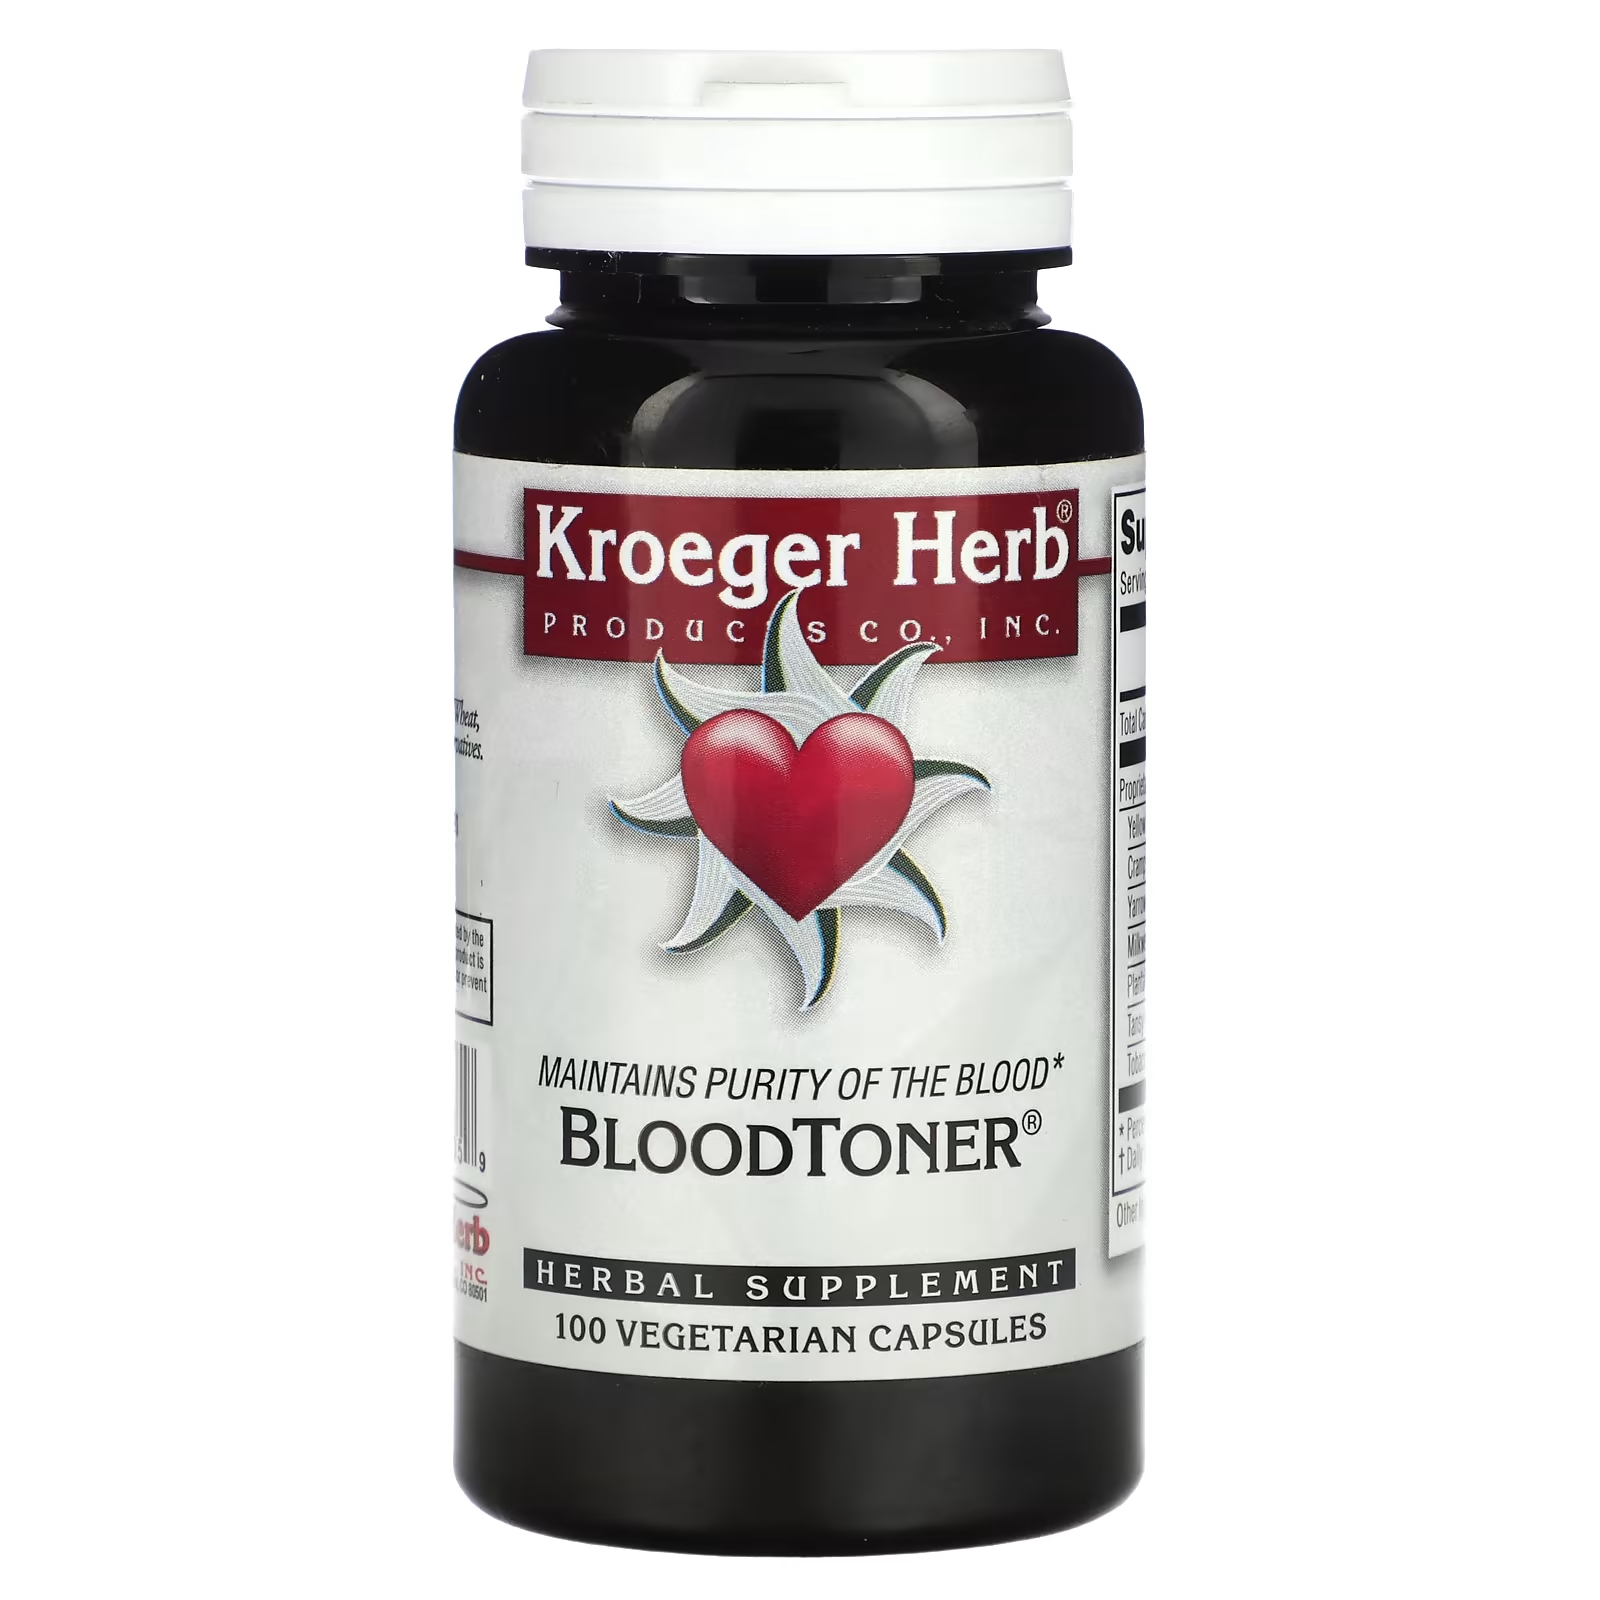 Растительная добавка Kroeger Herb Co Blood Toner, 100 капсул растительная добавка kroeger herb co балансировщик полярности 100 капсул